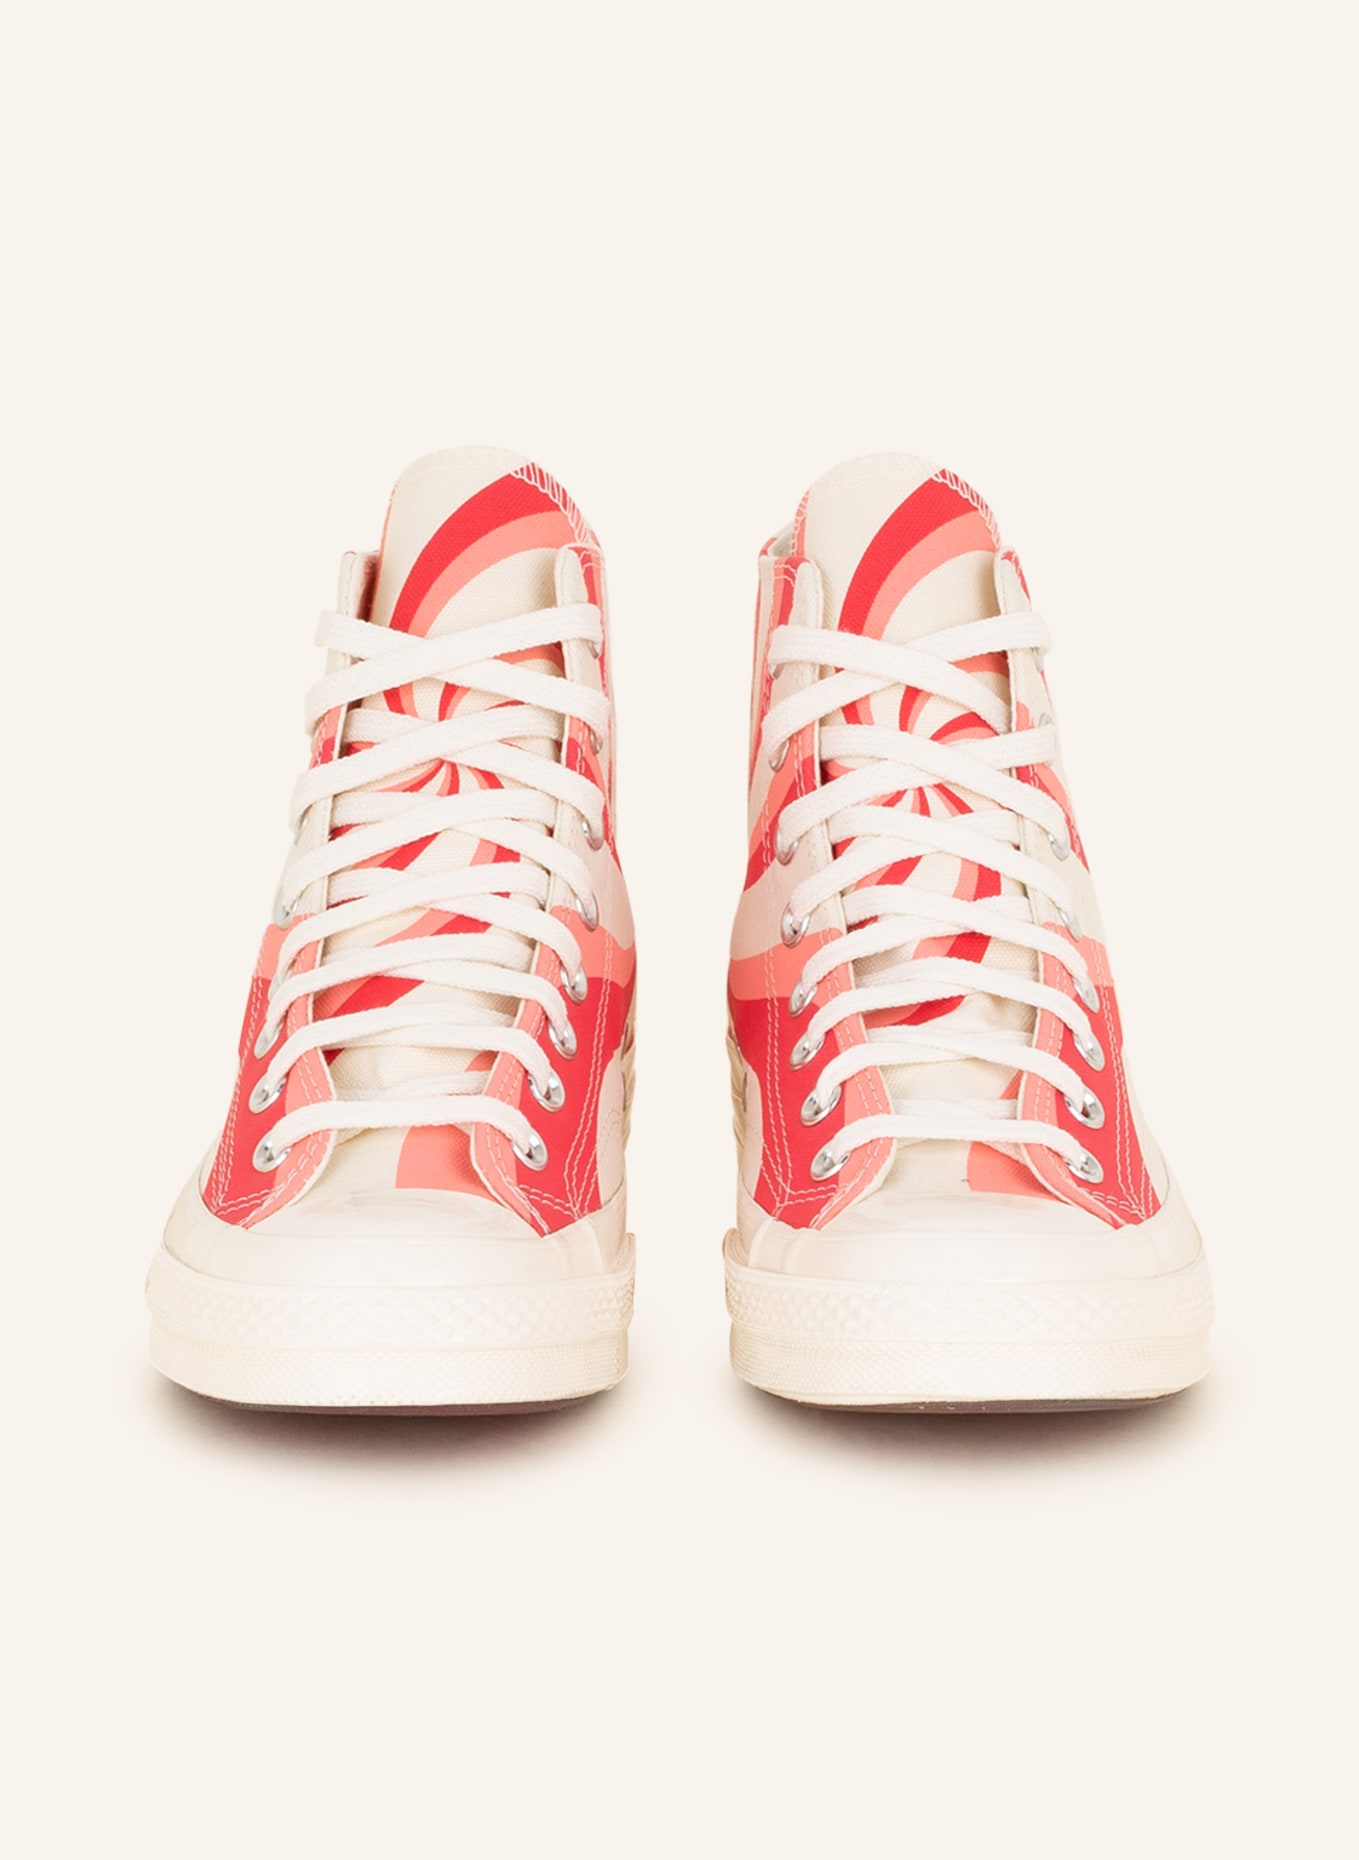 CONVERSE Hightop-Sneaker CHUCK 70, Farbe: CREME/ PINK (Bild 3)